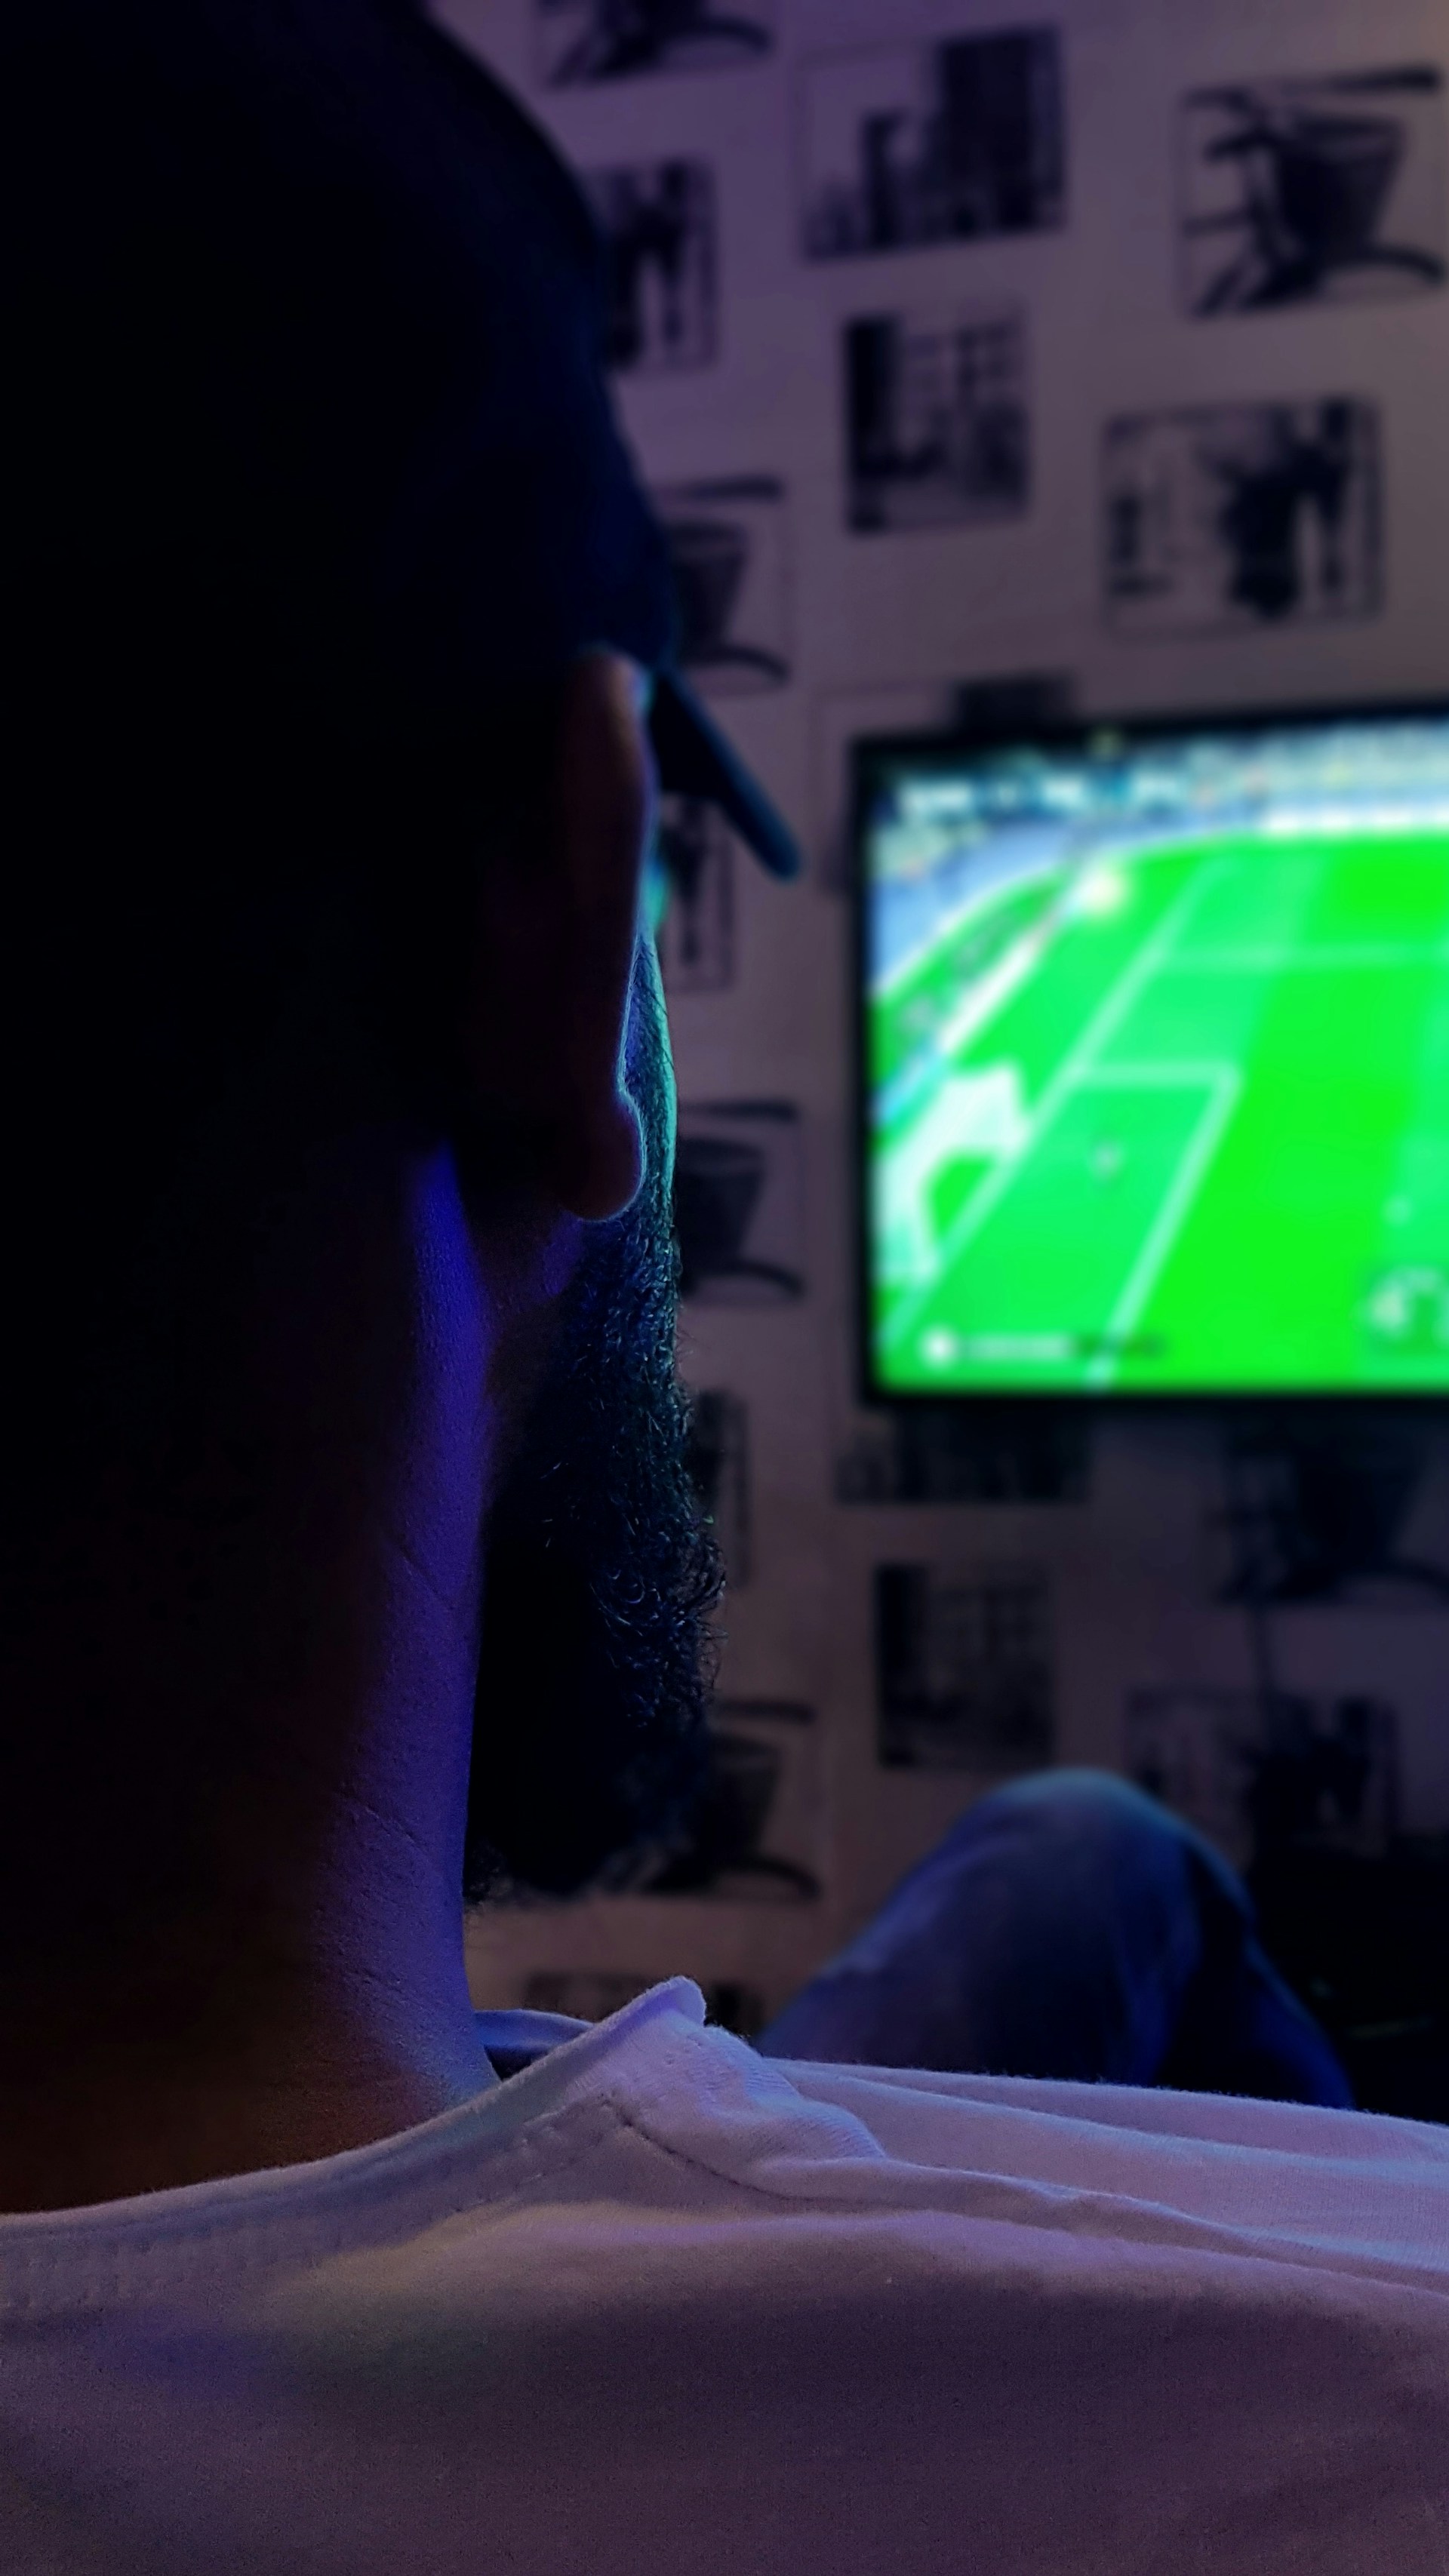 Man watching sports on television | Source: Unsplash